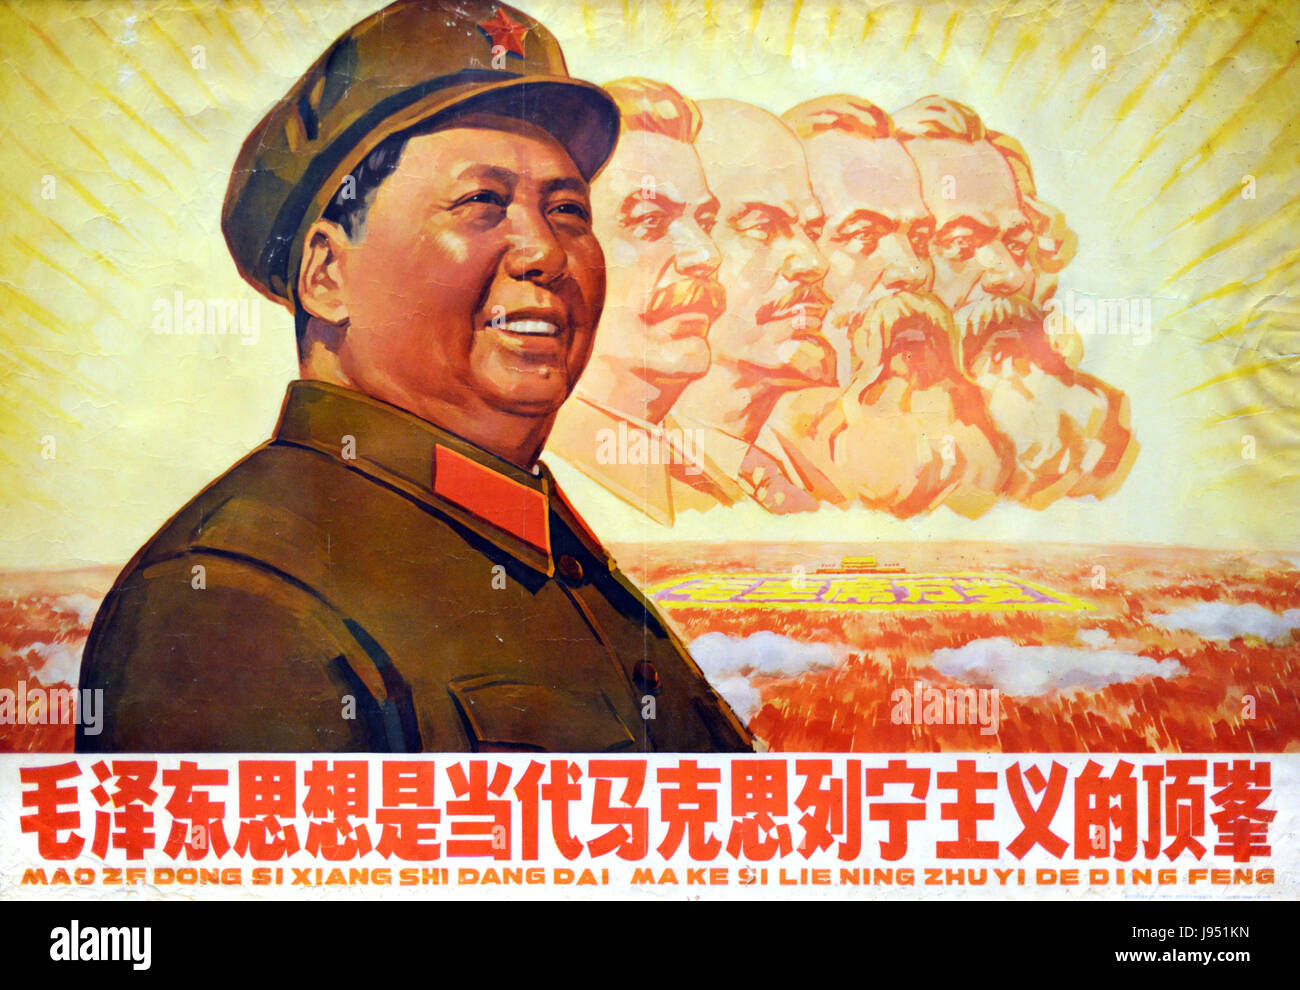 Overgivelse Etablere Helt tør Mao Zedong, Mao Tse-tung or Chairman Mao Communist Propaganda Poster from  1940s Stock Photo - Alamy